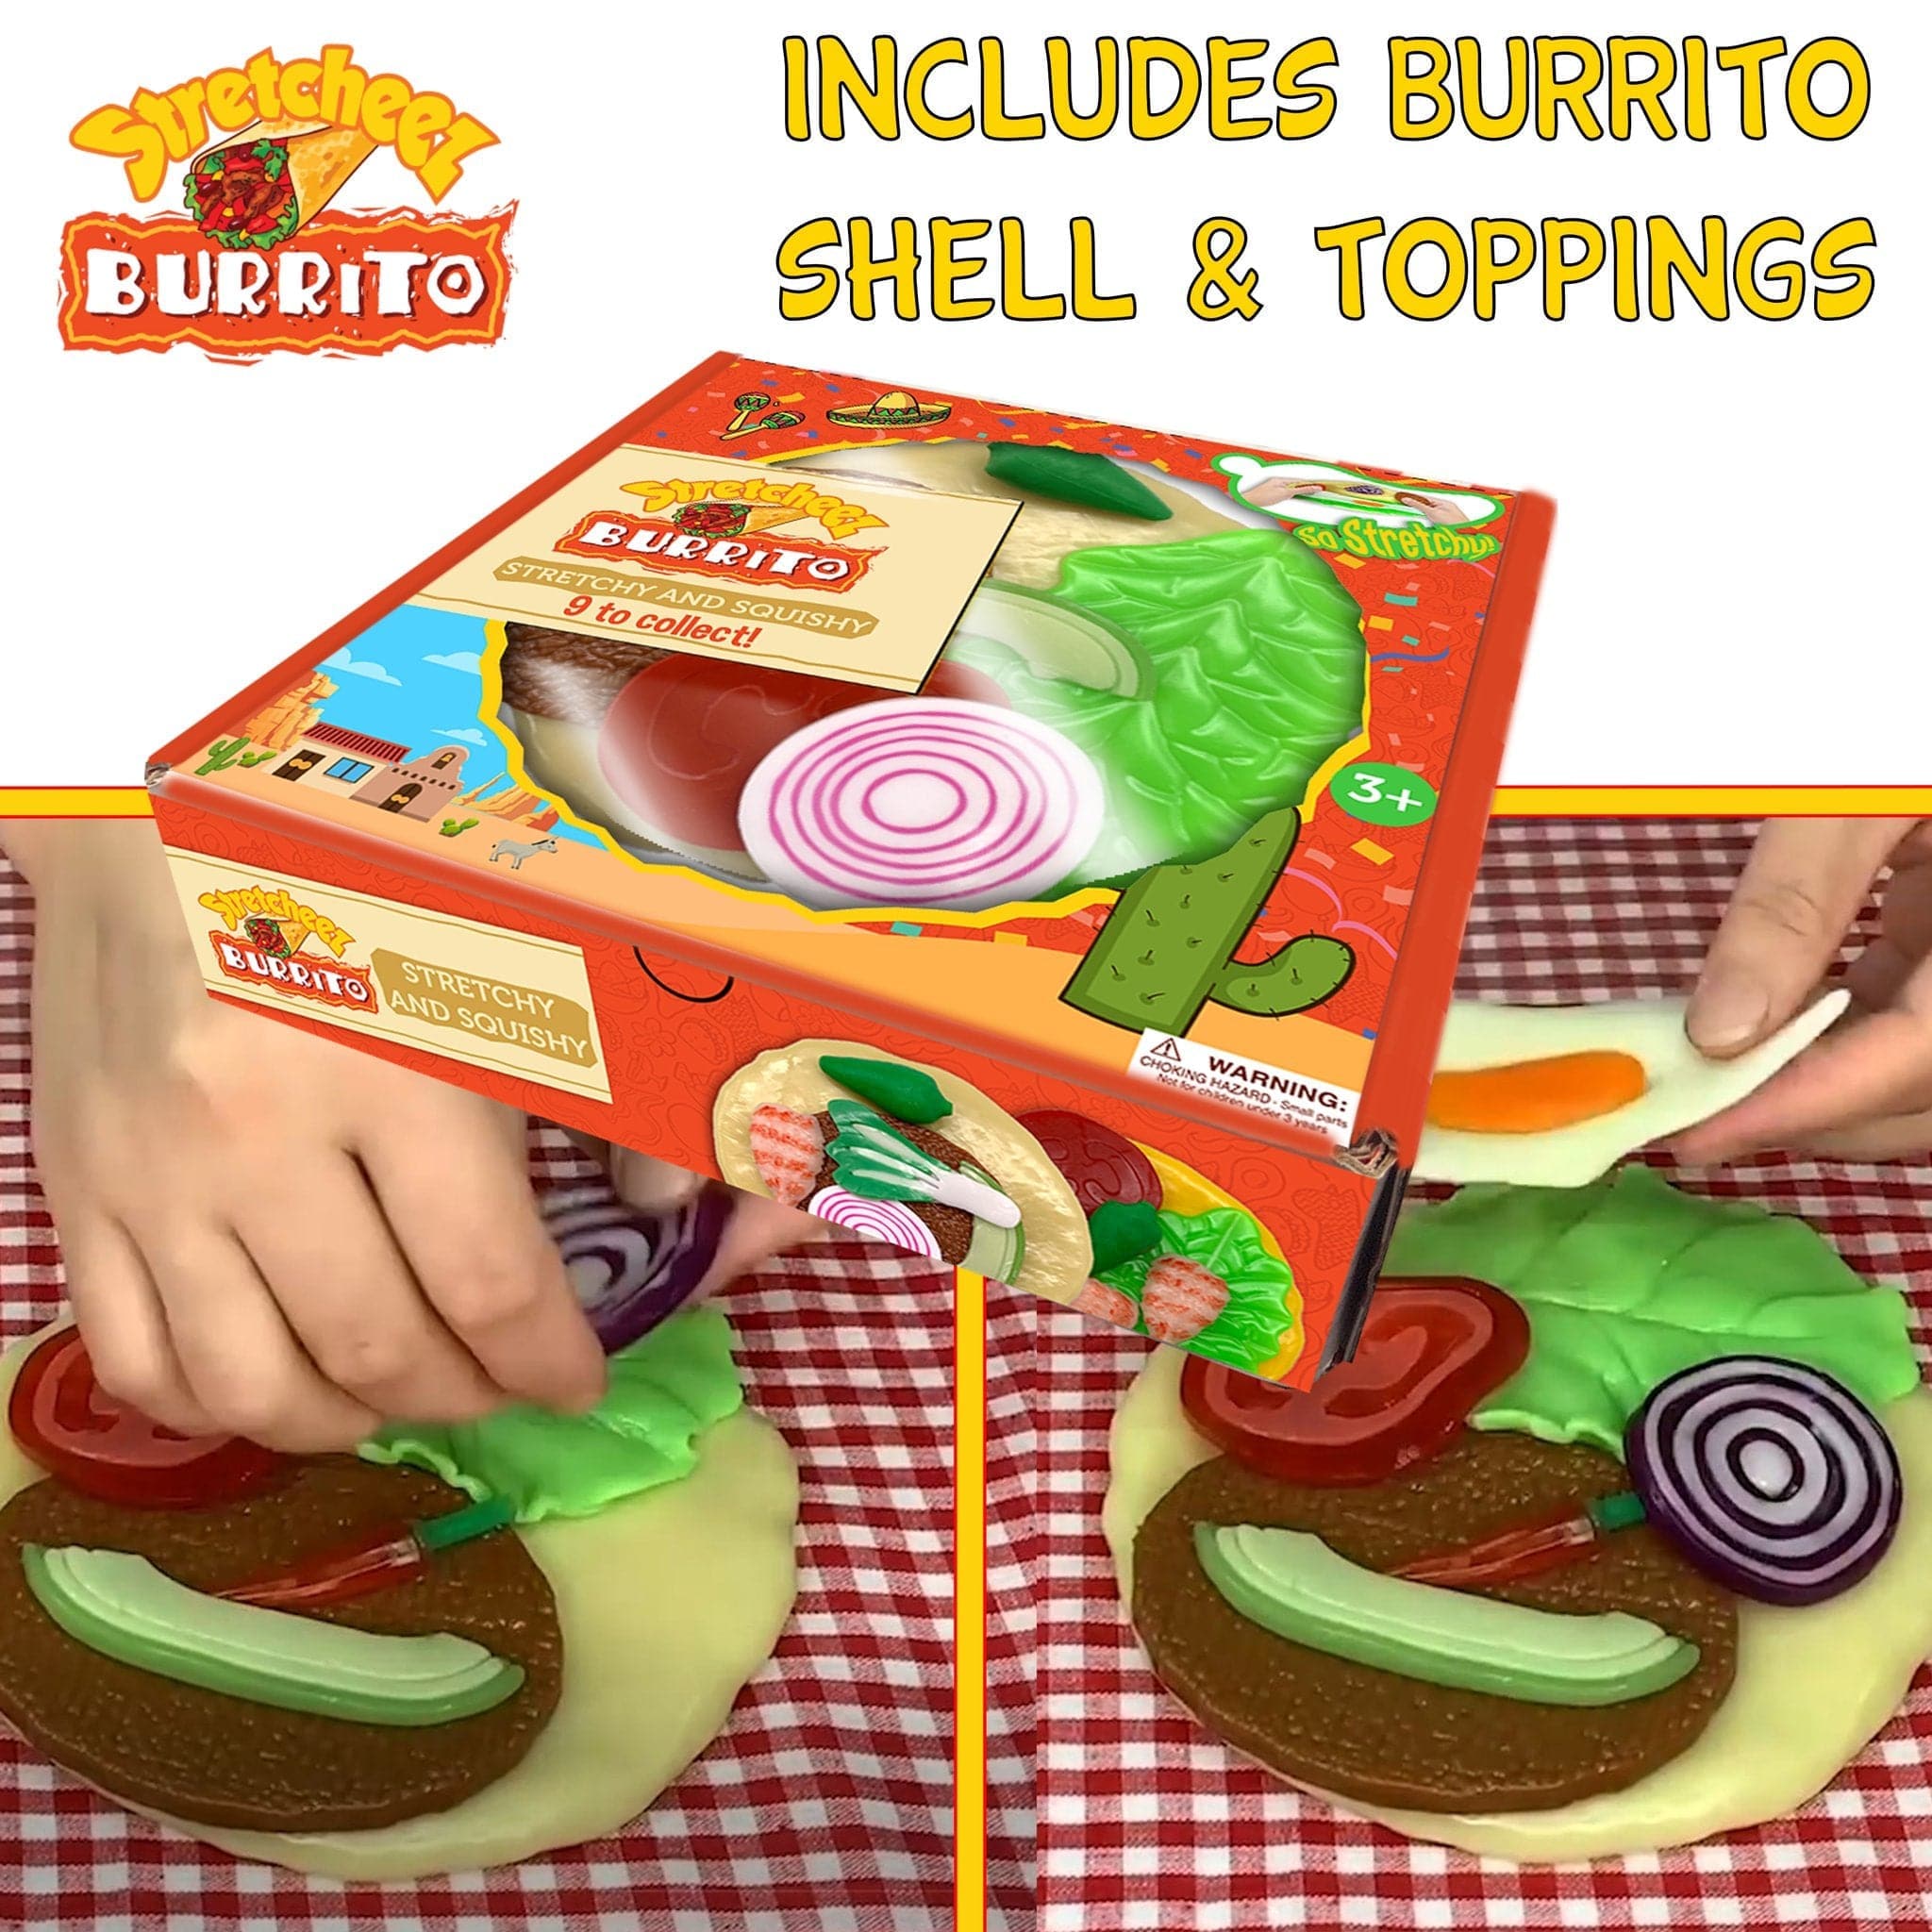 Thin Air Brands-Stretcheez Burrito - Play Food--Legacy Toys